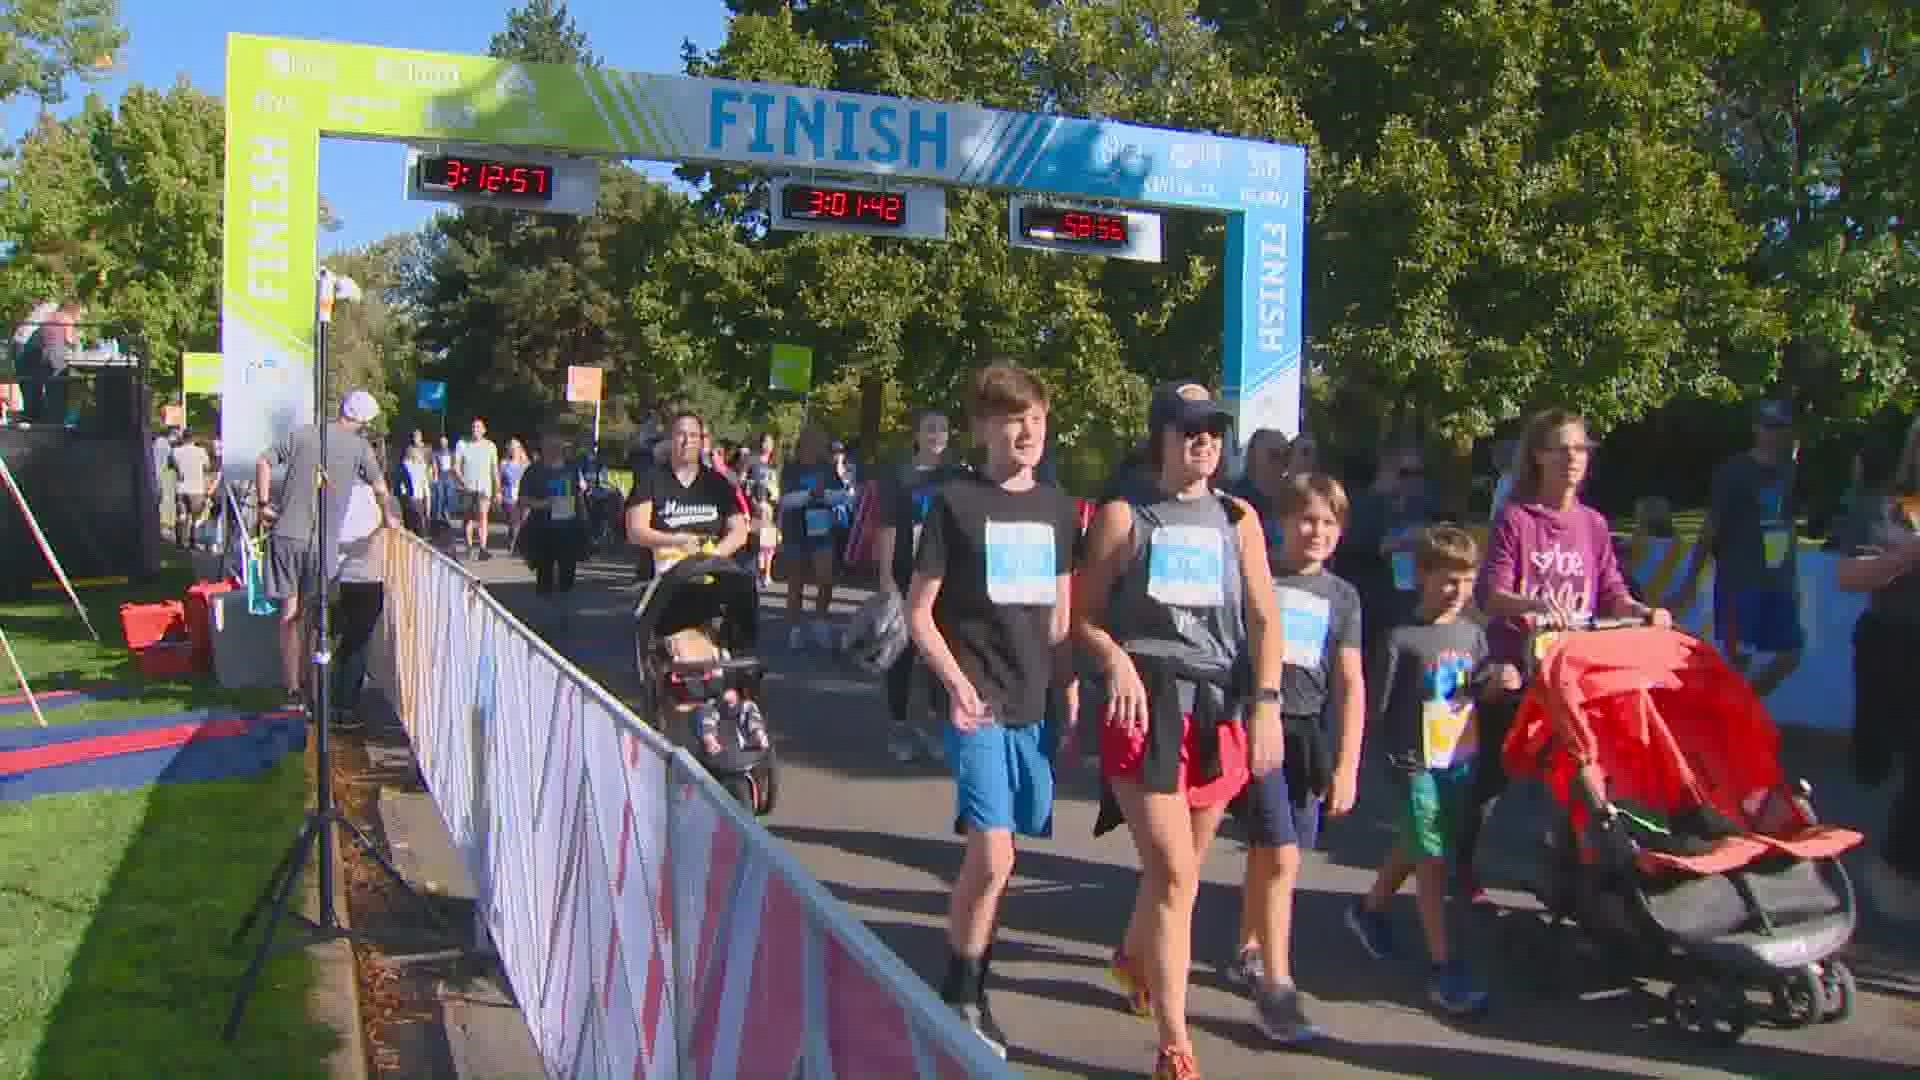 St. Luke's FitOne race runners crossing the finish line.